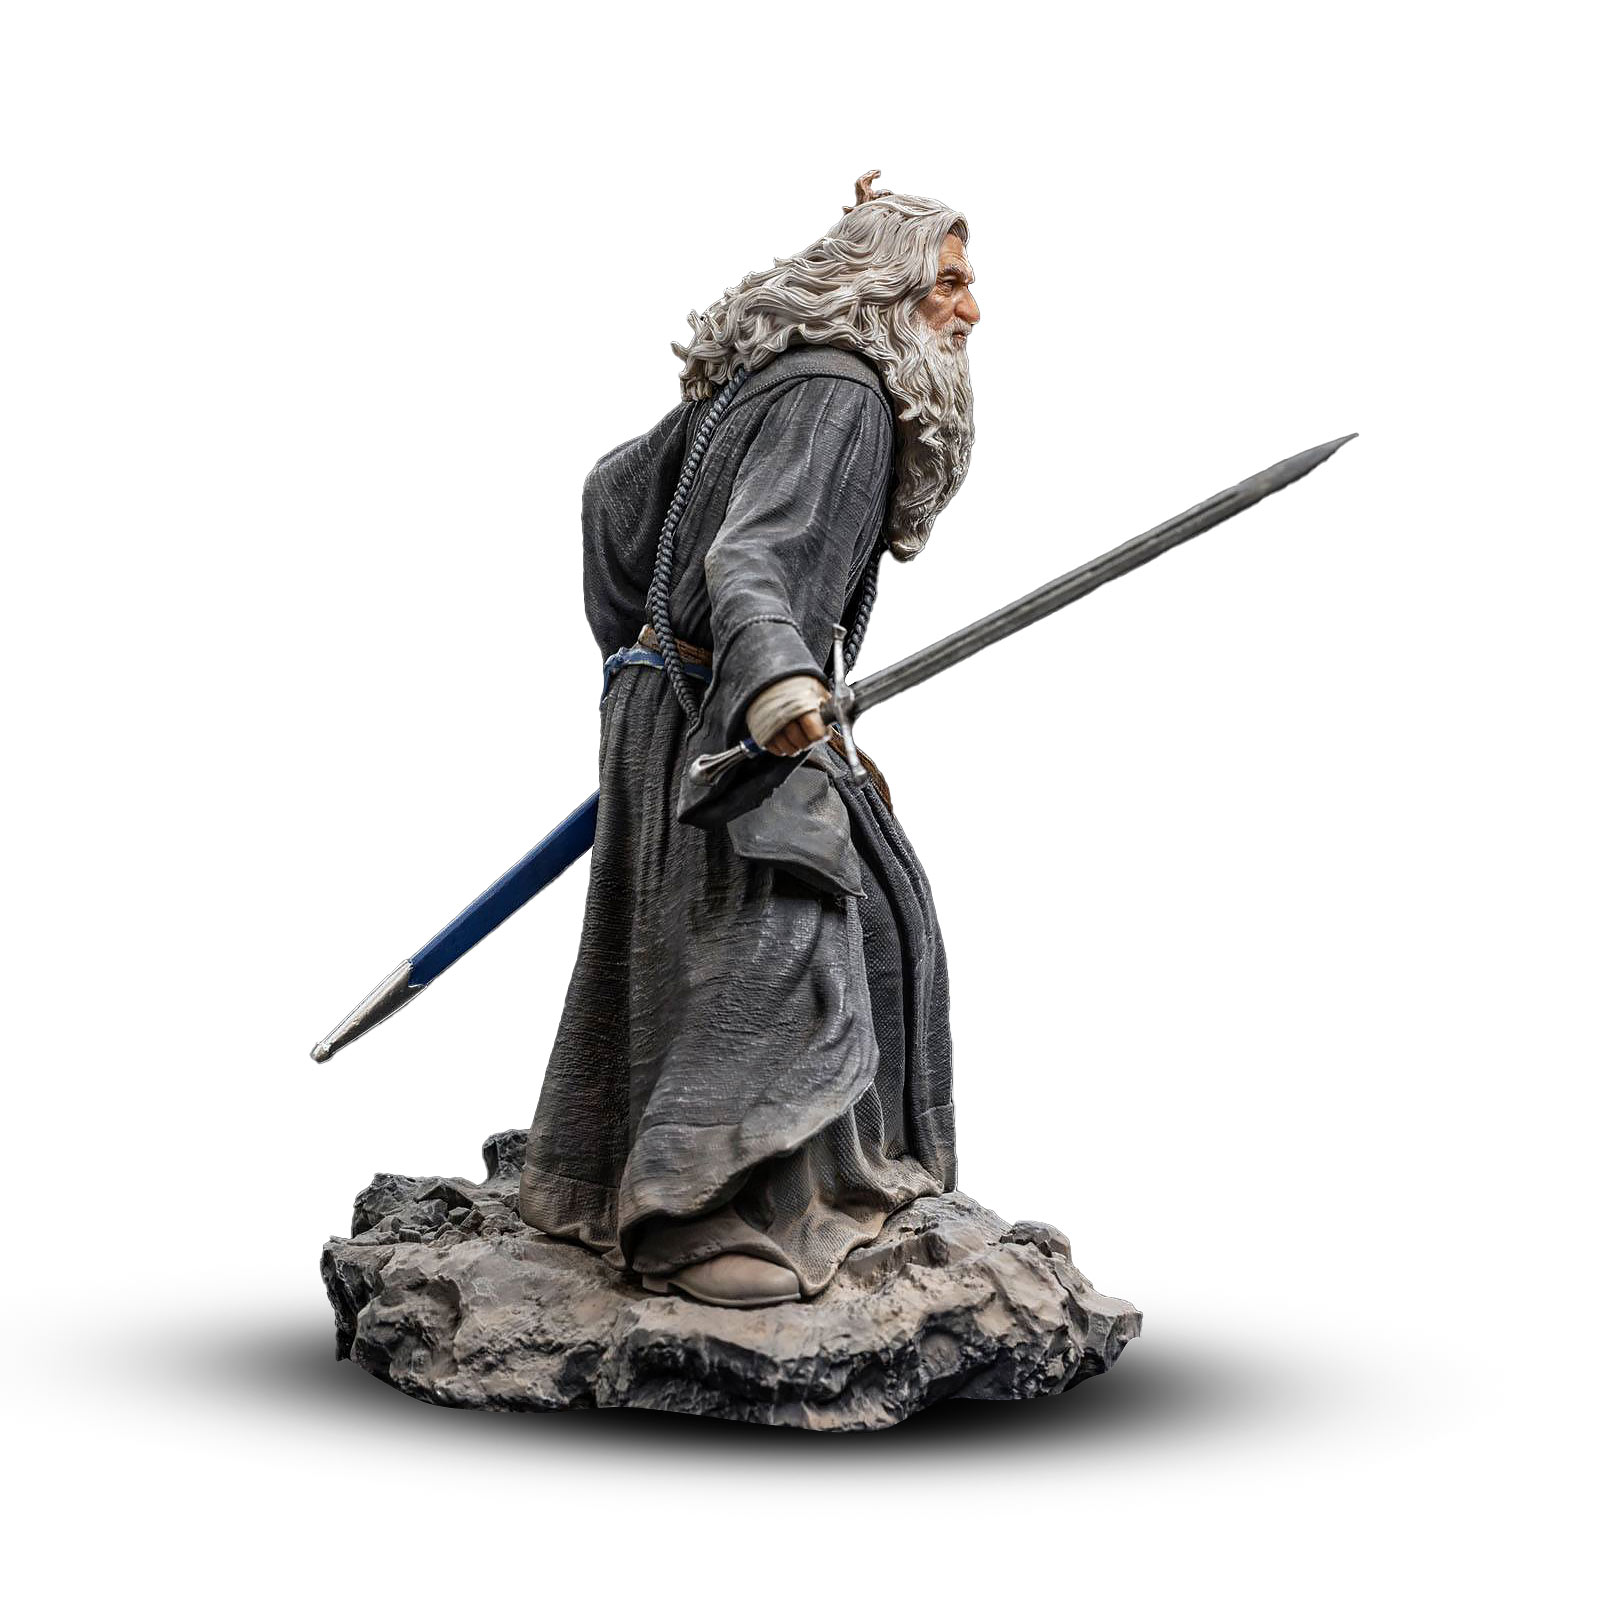 Herr der Ringe - Gandalf BDS Art Scale Deluxe Statue 1:10